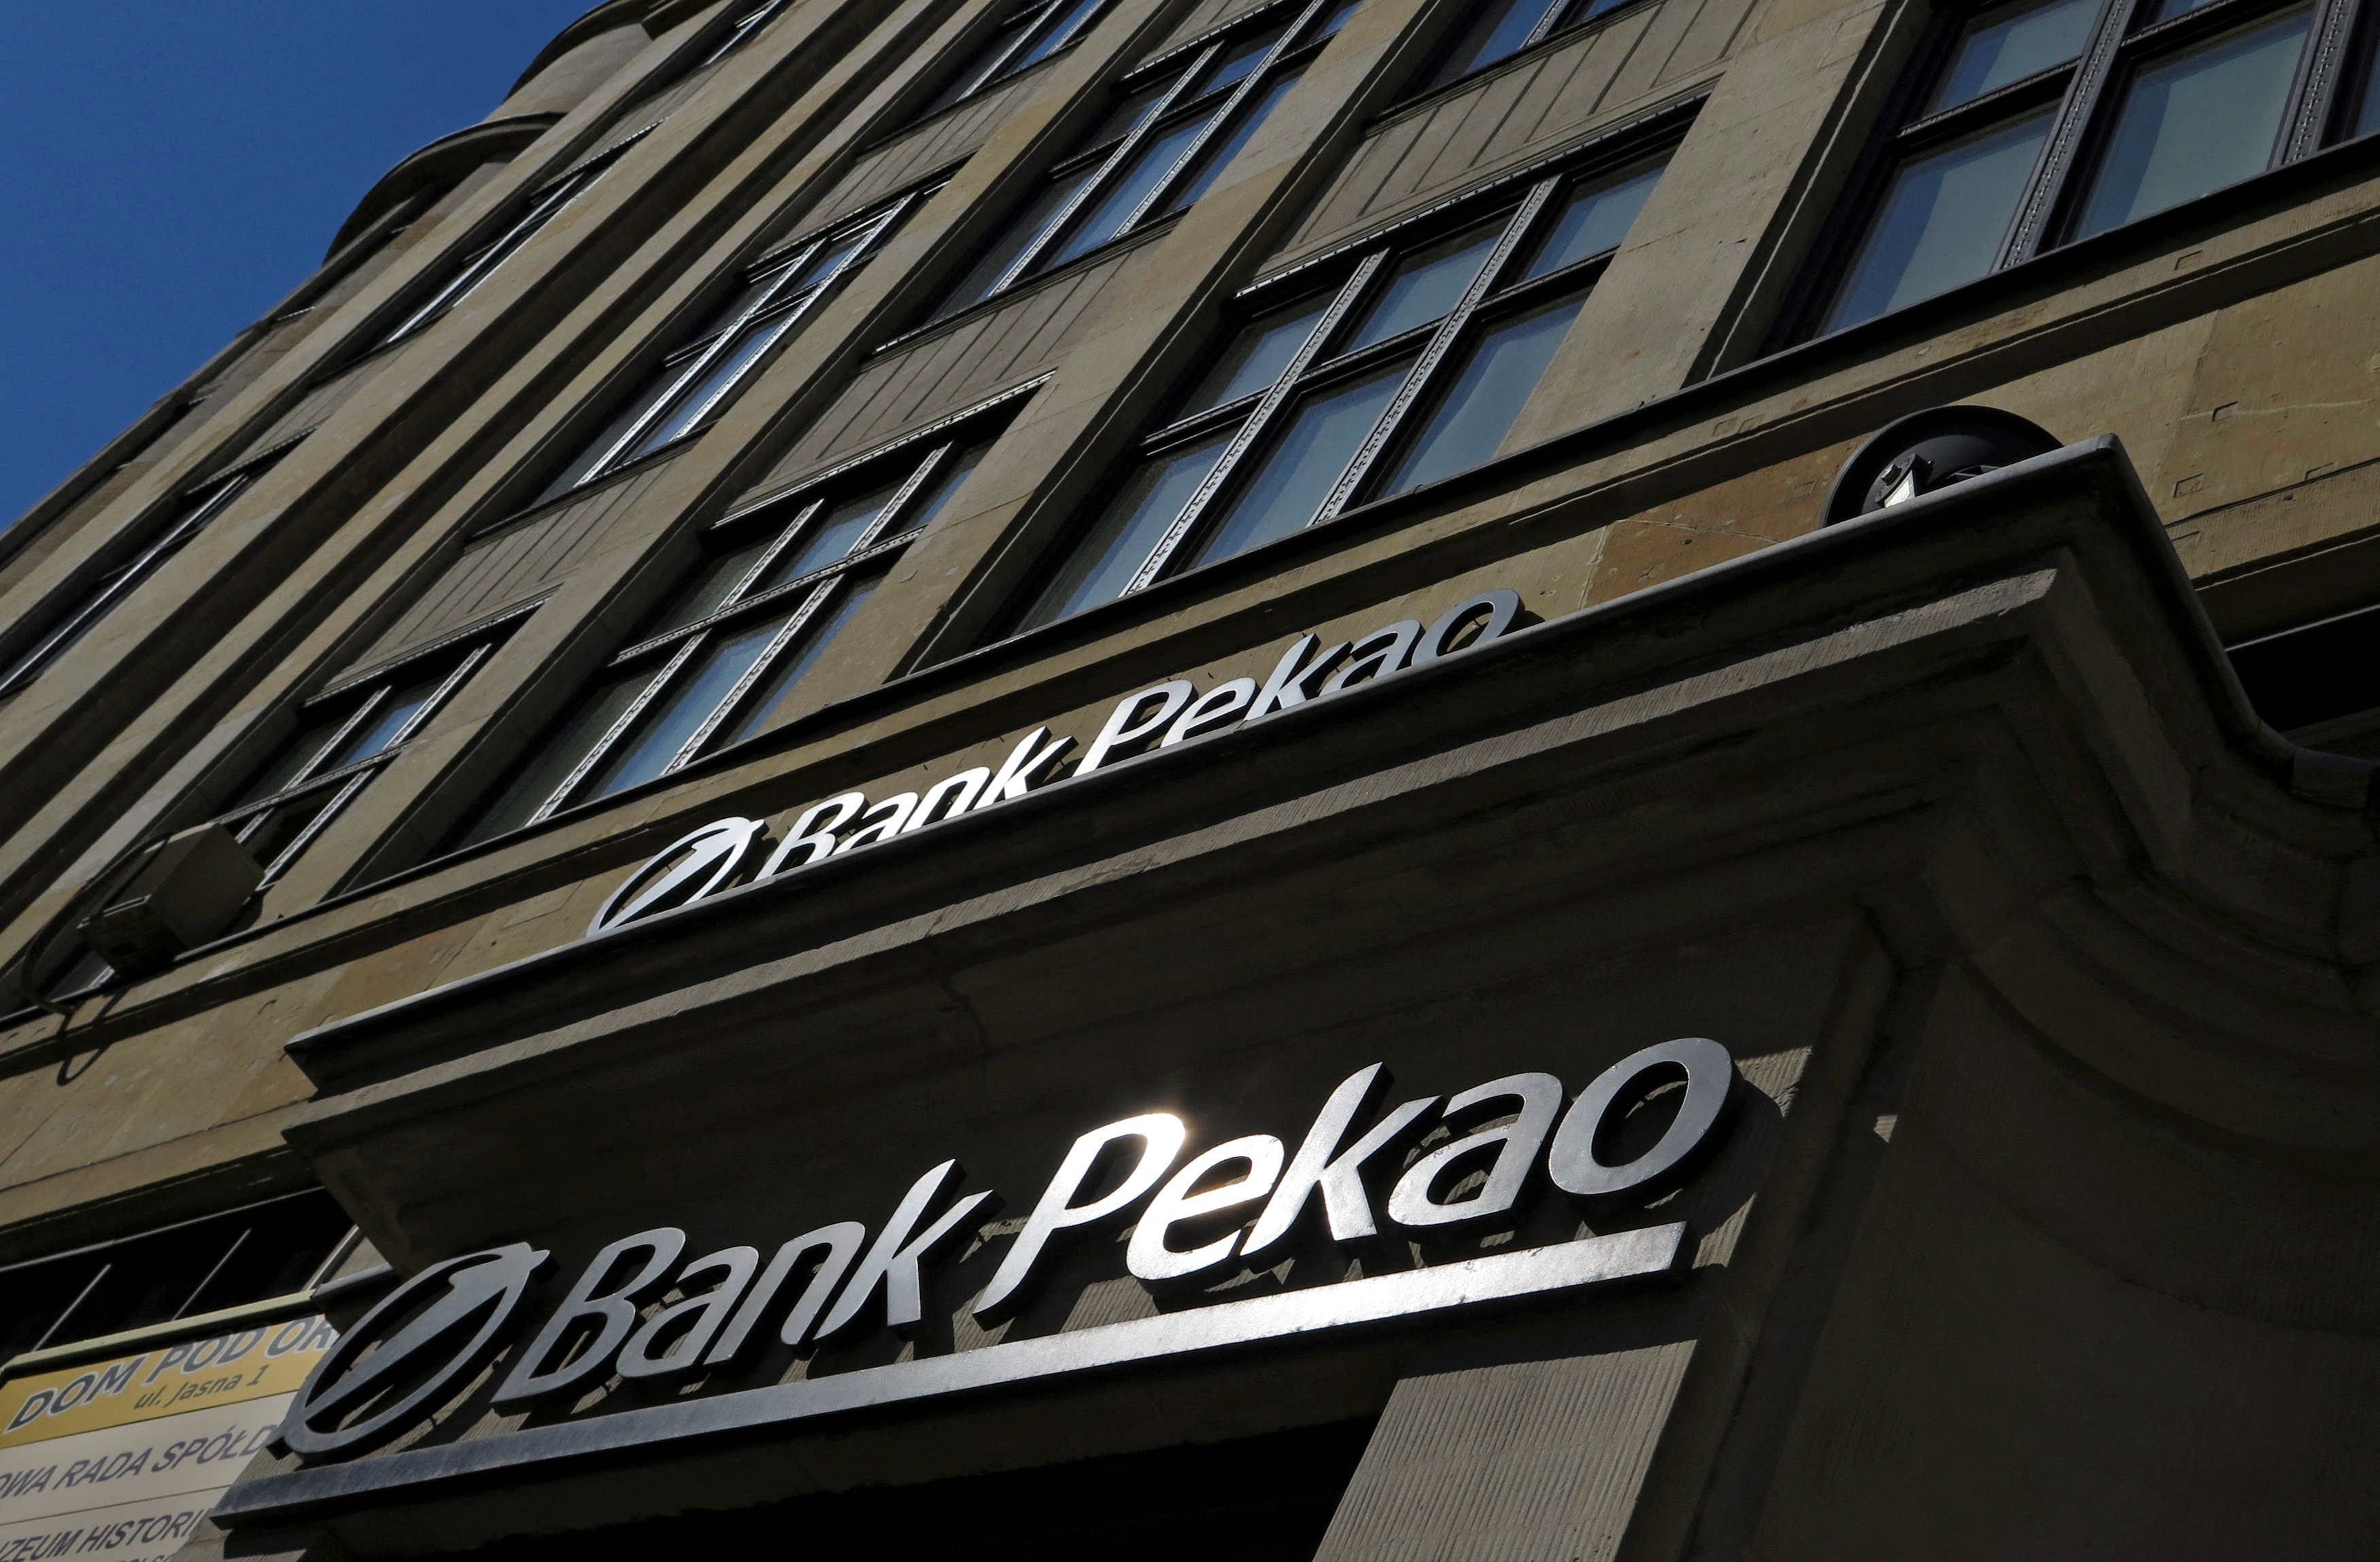 Units bank. Банк Пекао. ЮНИКРЕДИТ банк логотип. Bank Pekao logo. Банк Пекао предложения.